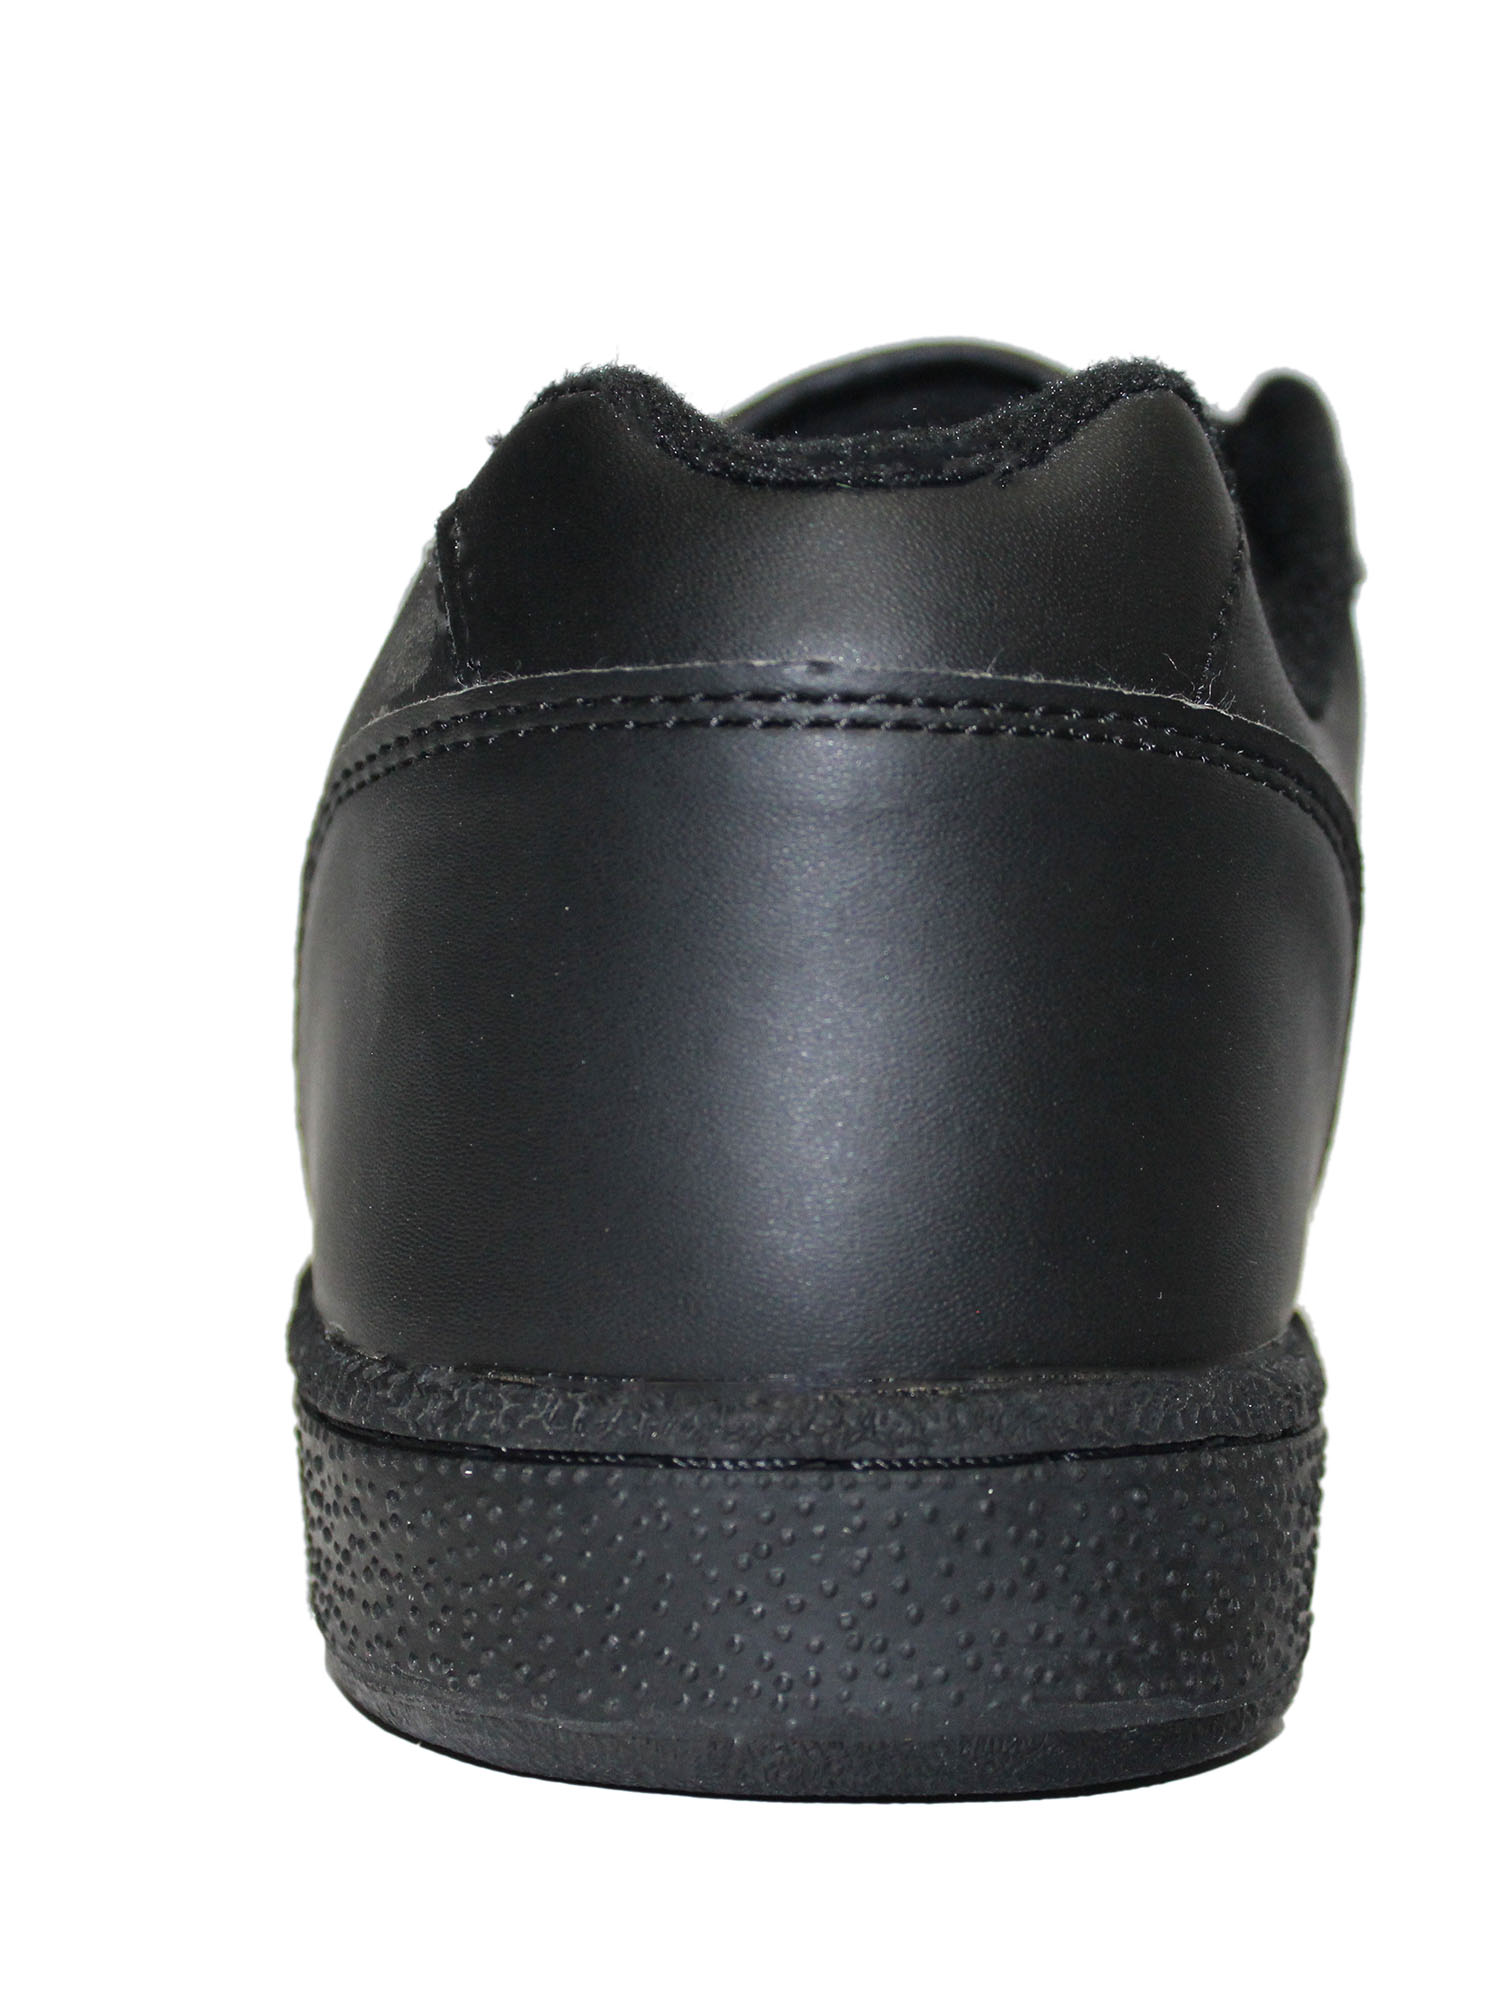 Tanleewa Men's Leather Strap Sneakers Lightweight Hook and Loop Walking Shoe Size 9.5 Adult Male - image 4 of 4